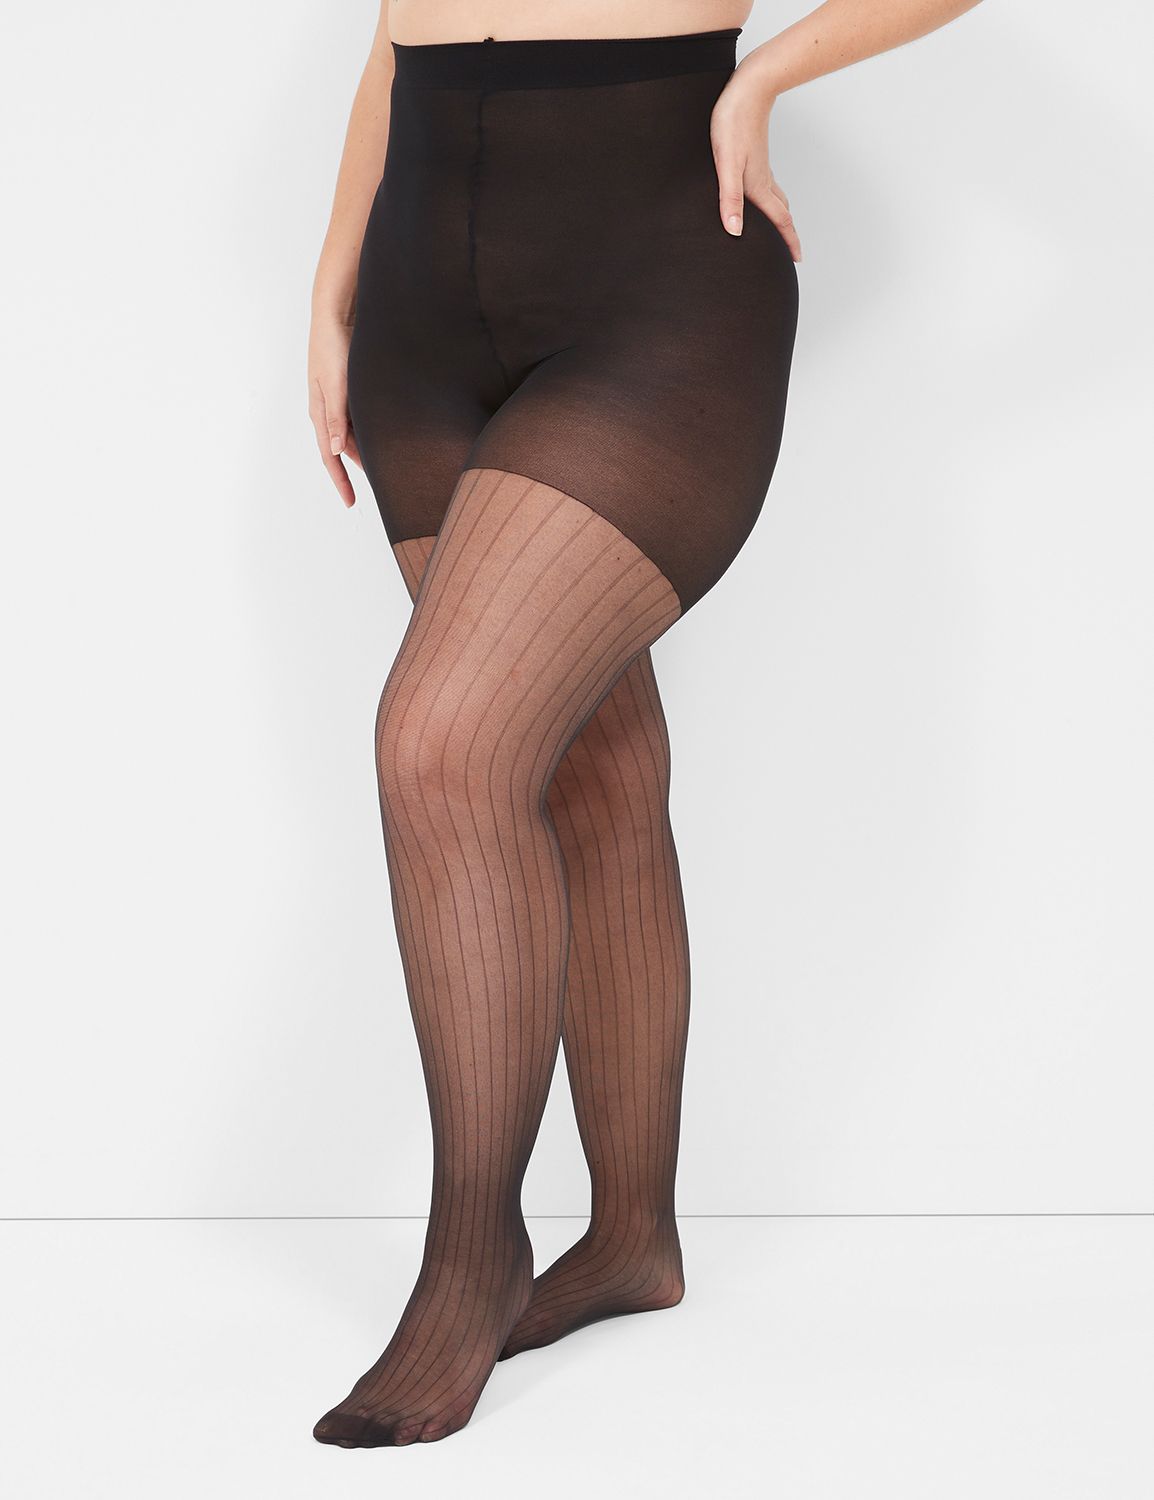 Women's Vertical Black Stripe Stockings